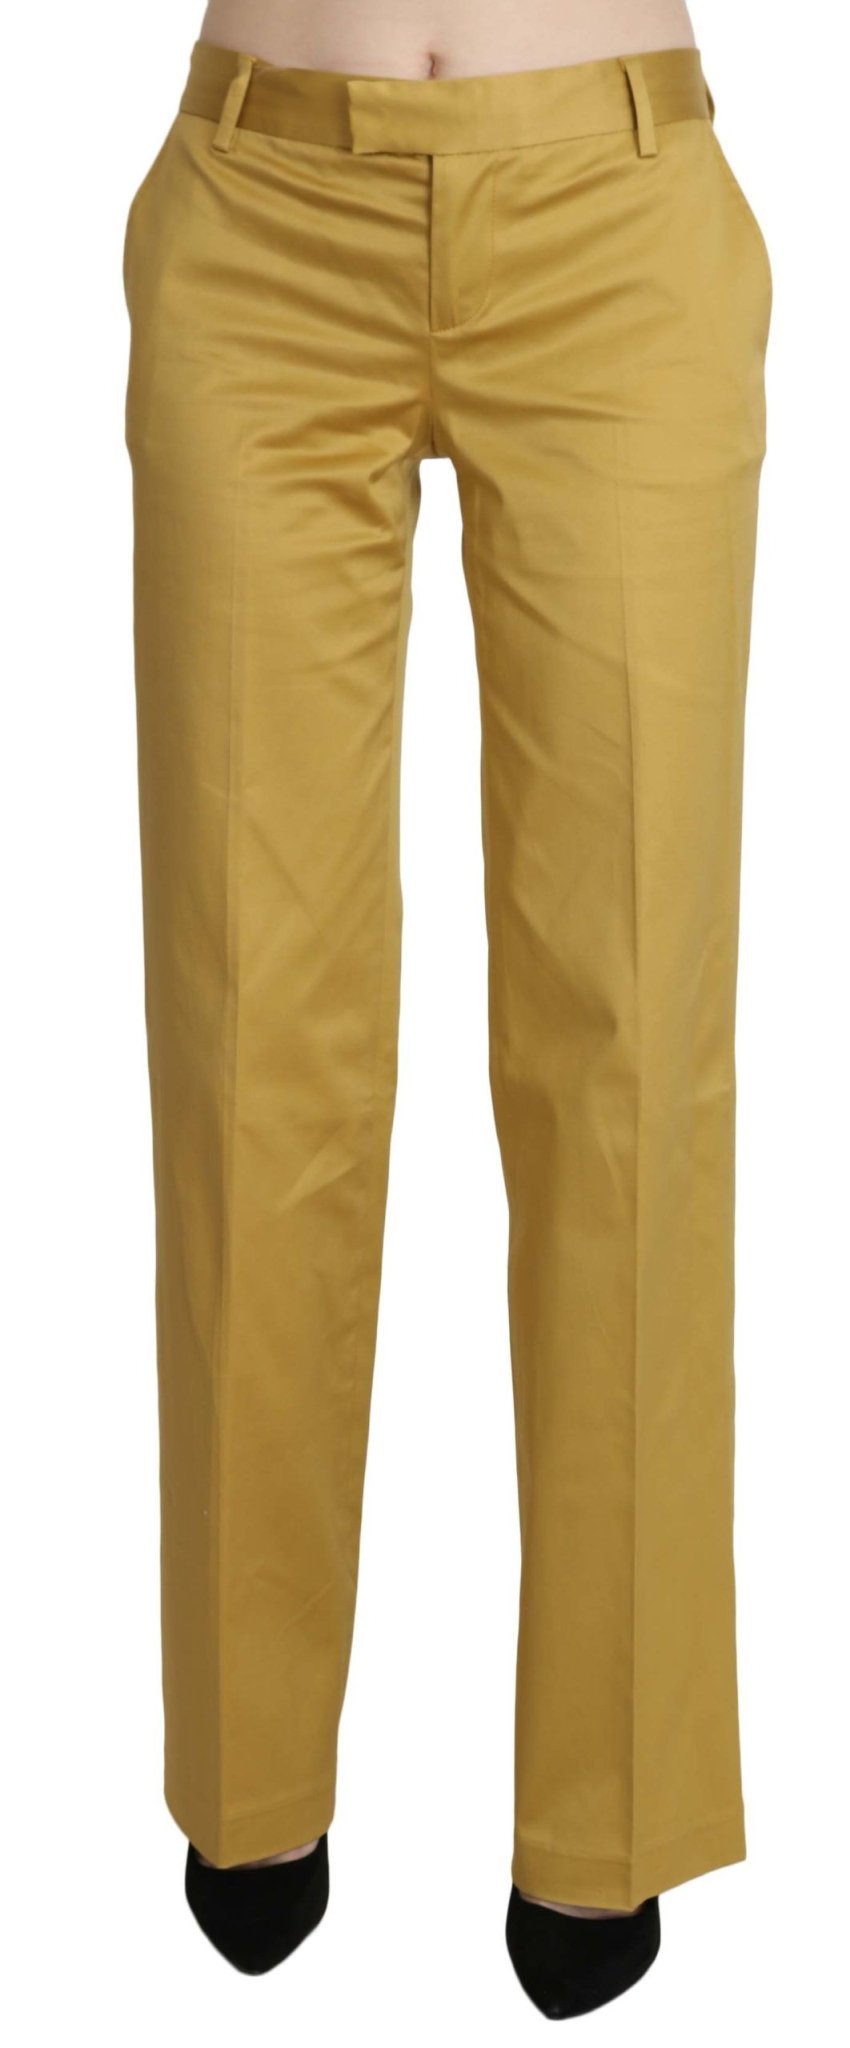 Just Cavalli Mustard Yellow Straight Formal Trousers Pants